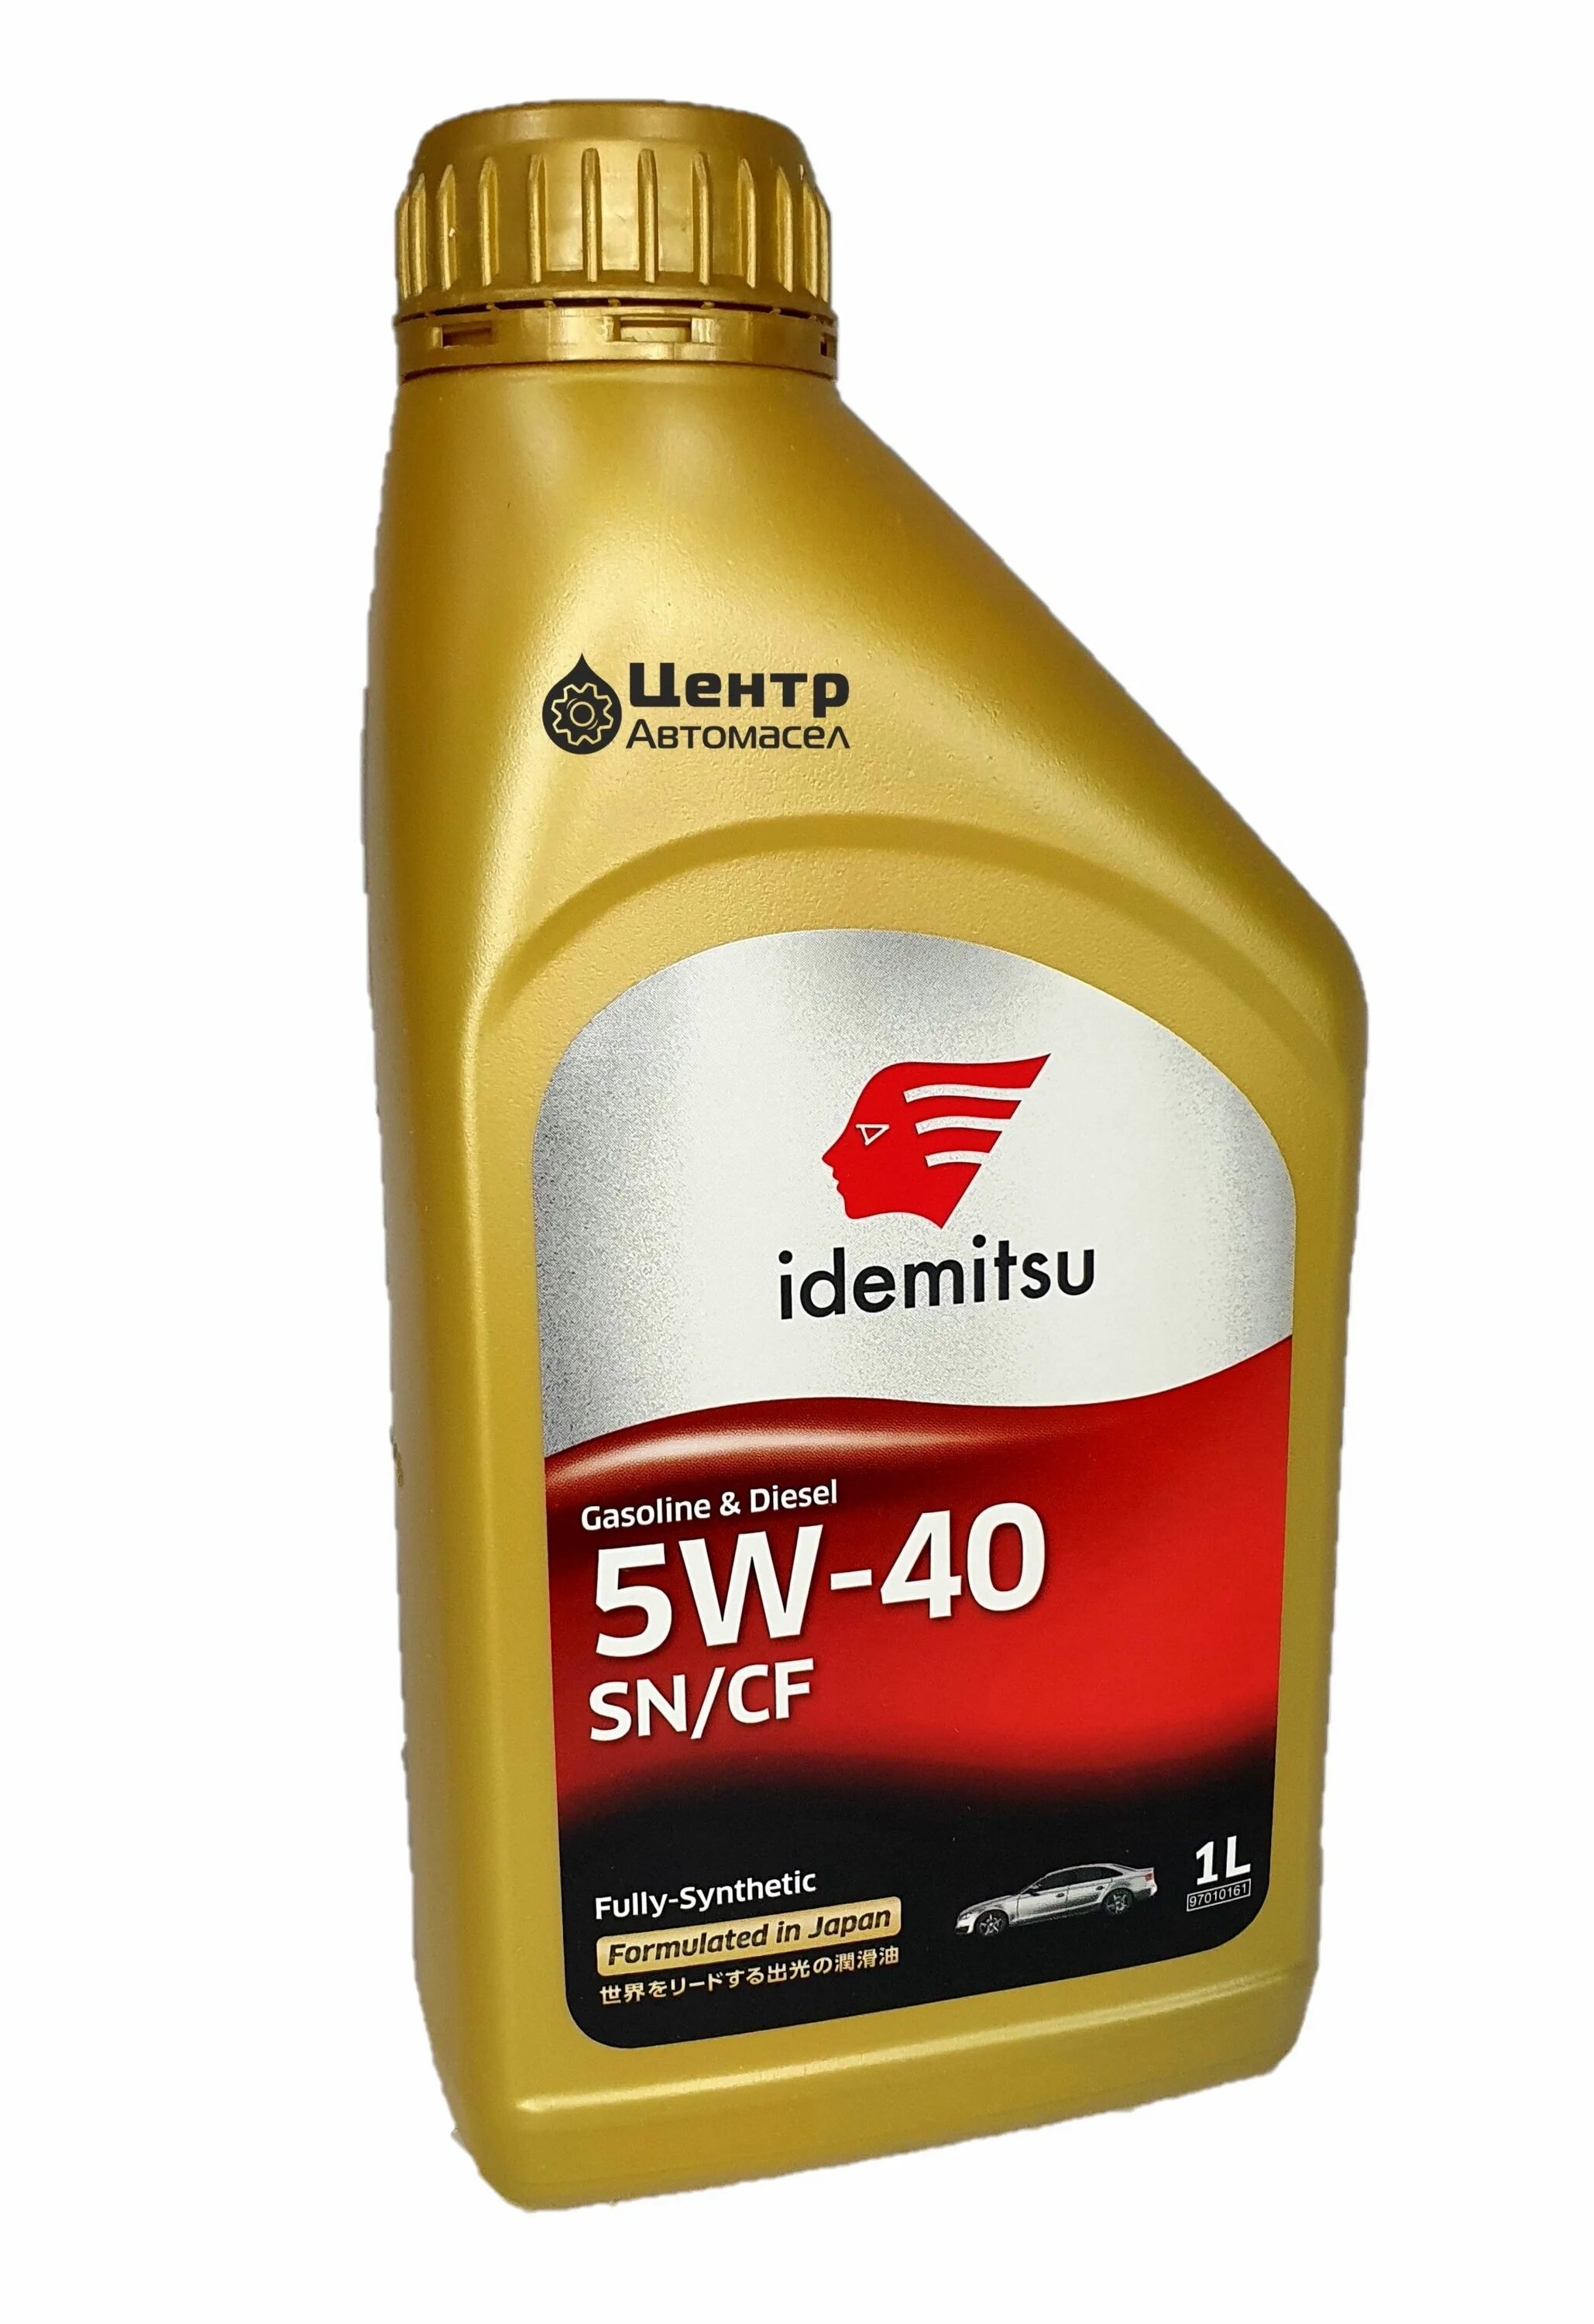 Idemitsu SN/CF 5w-40 1л. 30015192746 Idemitsu. Idemitsu 5w40 SN/CF Oil Club. Моторное масло Idemitsu Semi-Synthetic SN/CF 10w-40 1л для мотоциклов.